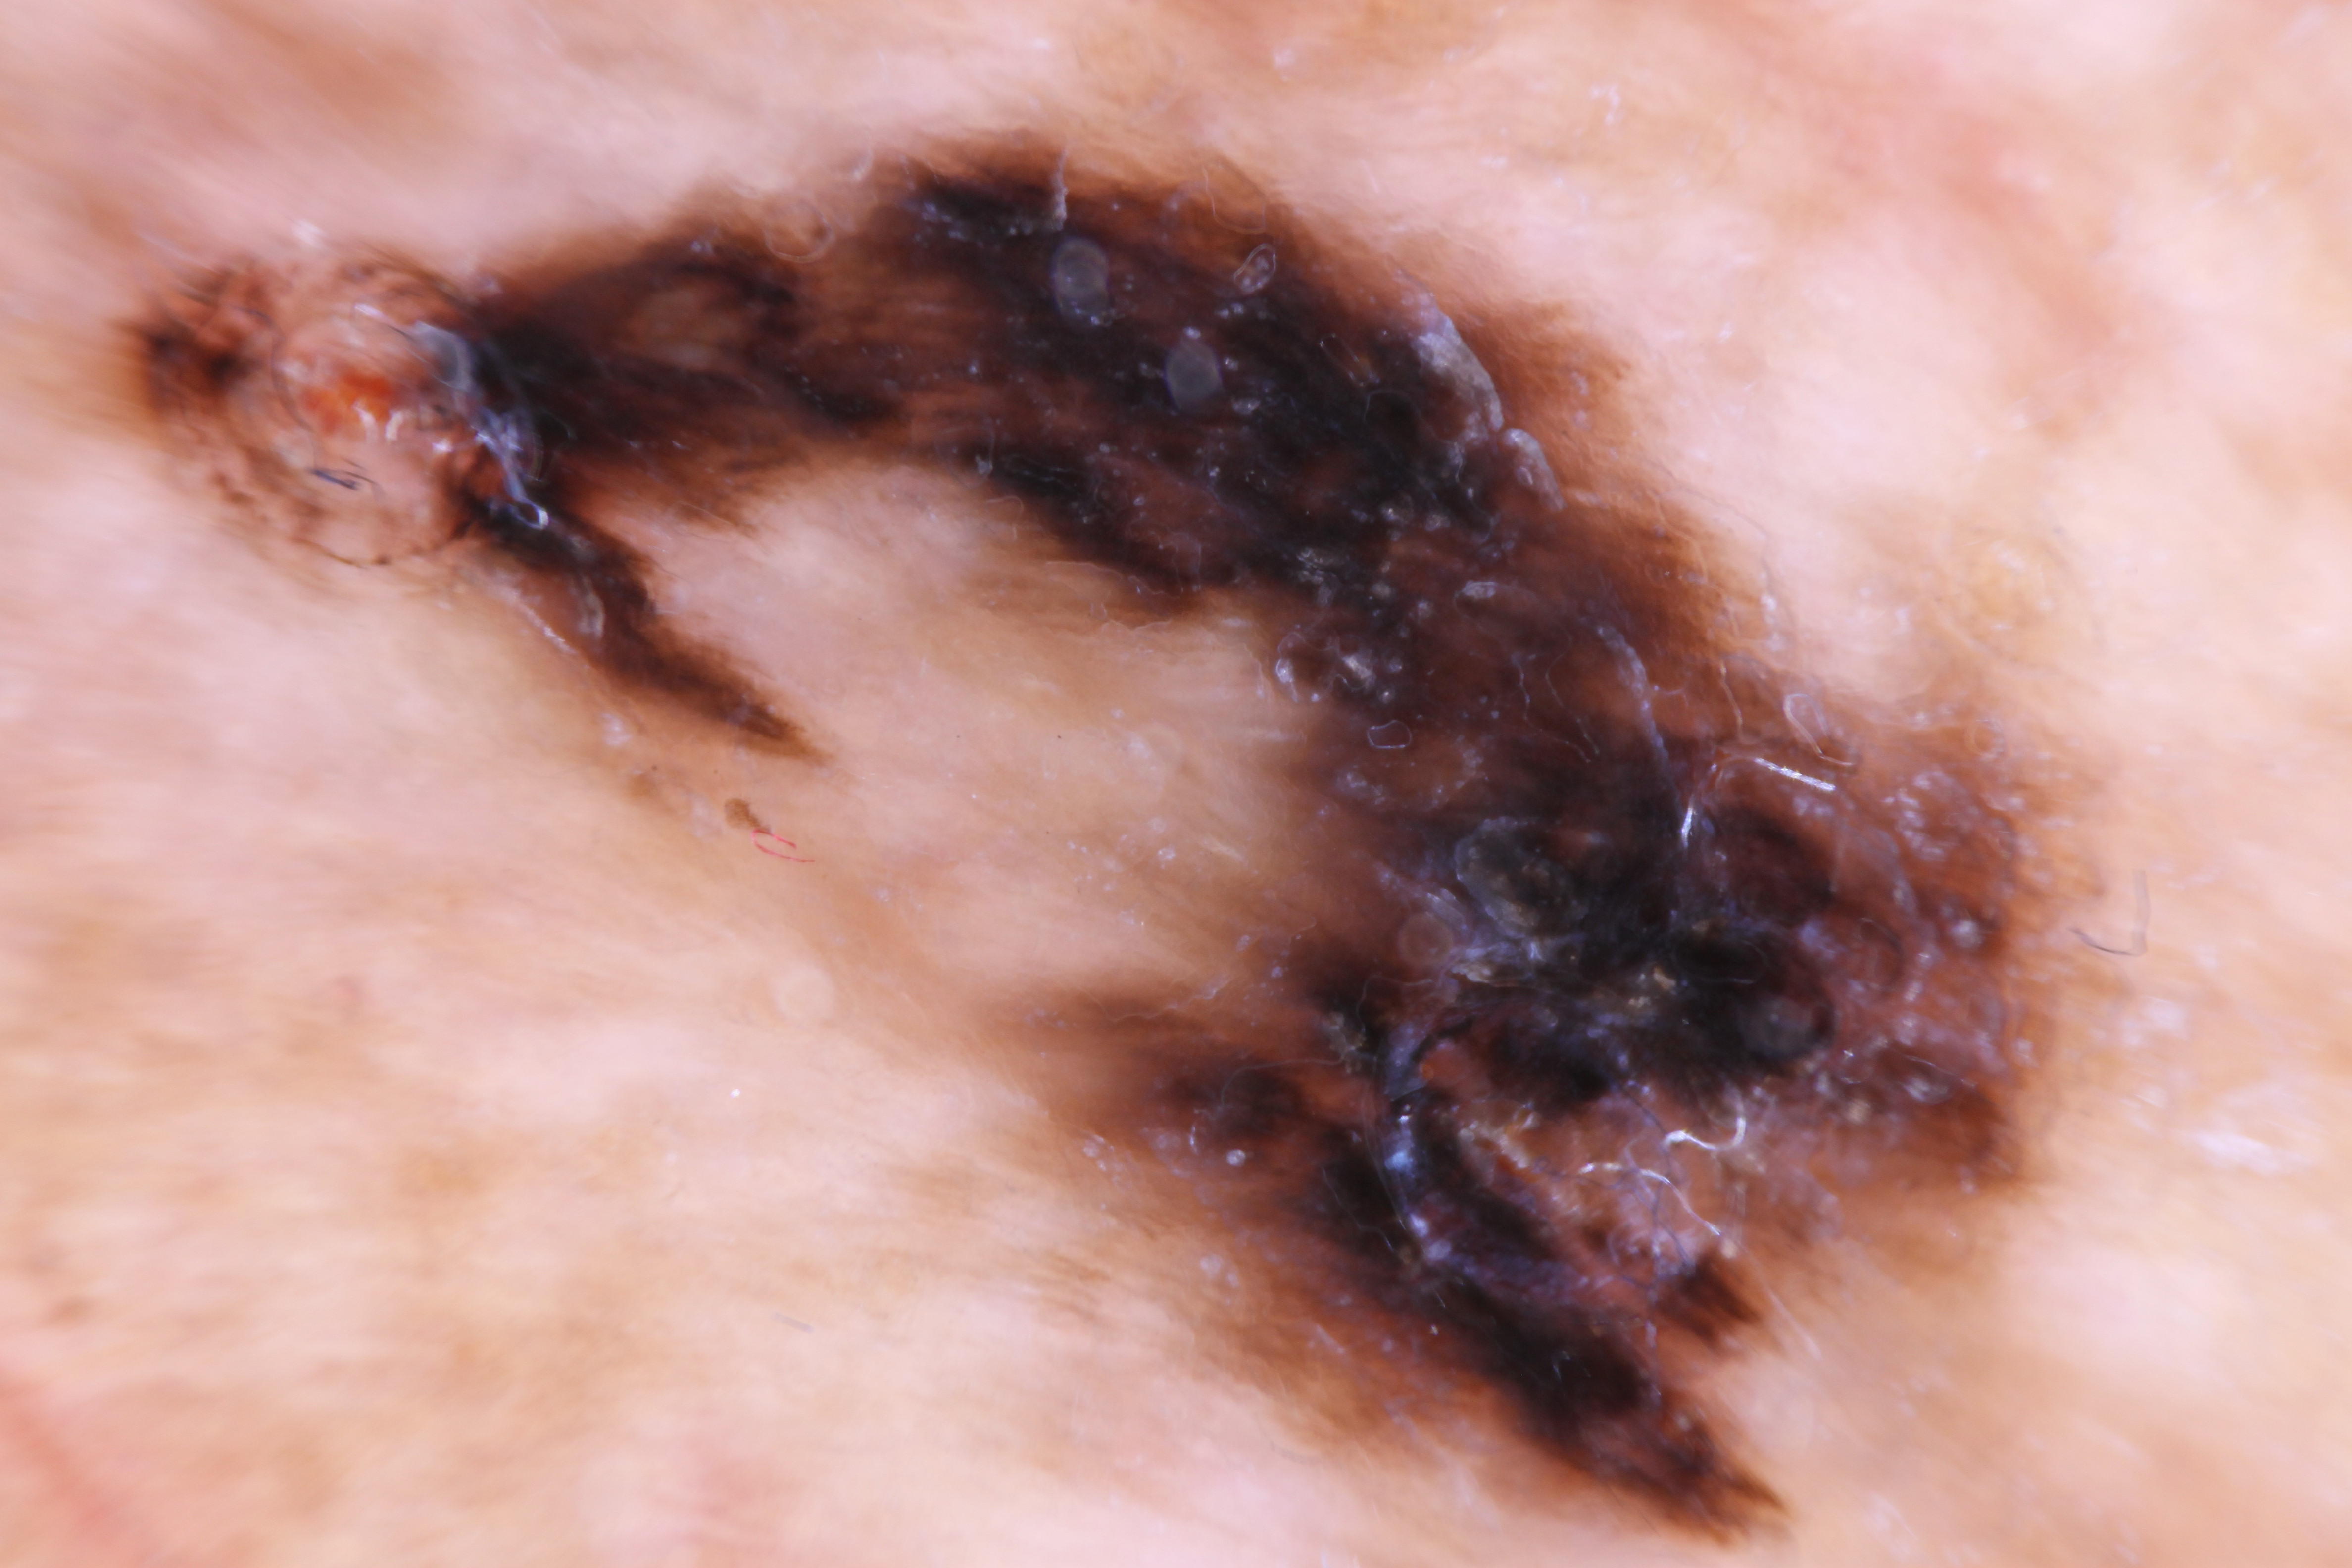 Asymmetric parallel ridge dermoscopic pattern indicative of acral lentiginous melanoma on the heel of 62 year old male.